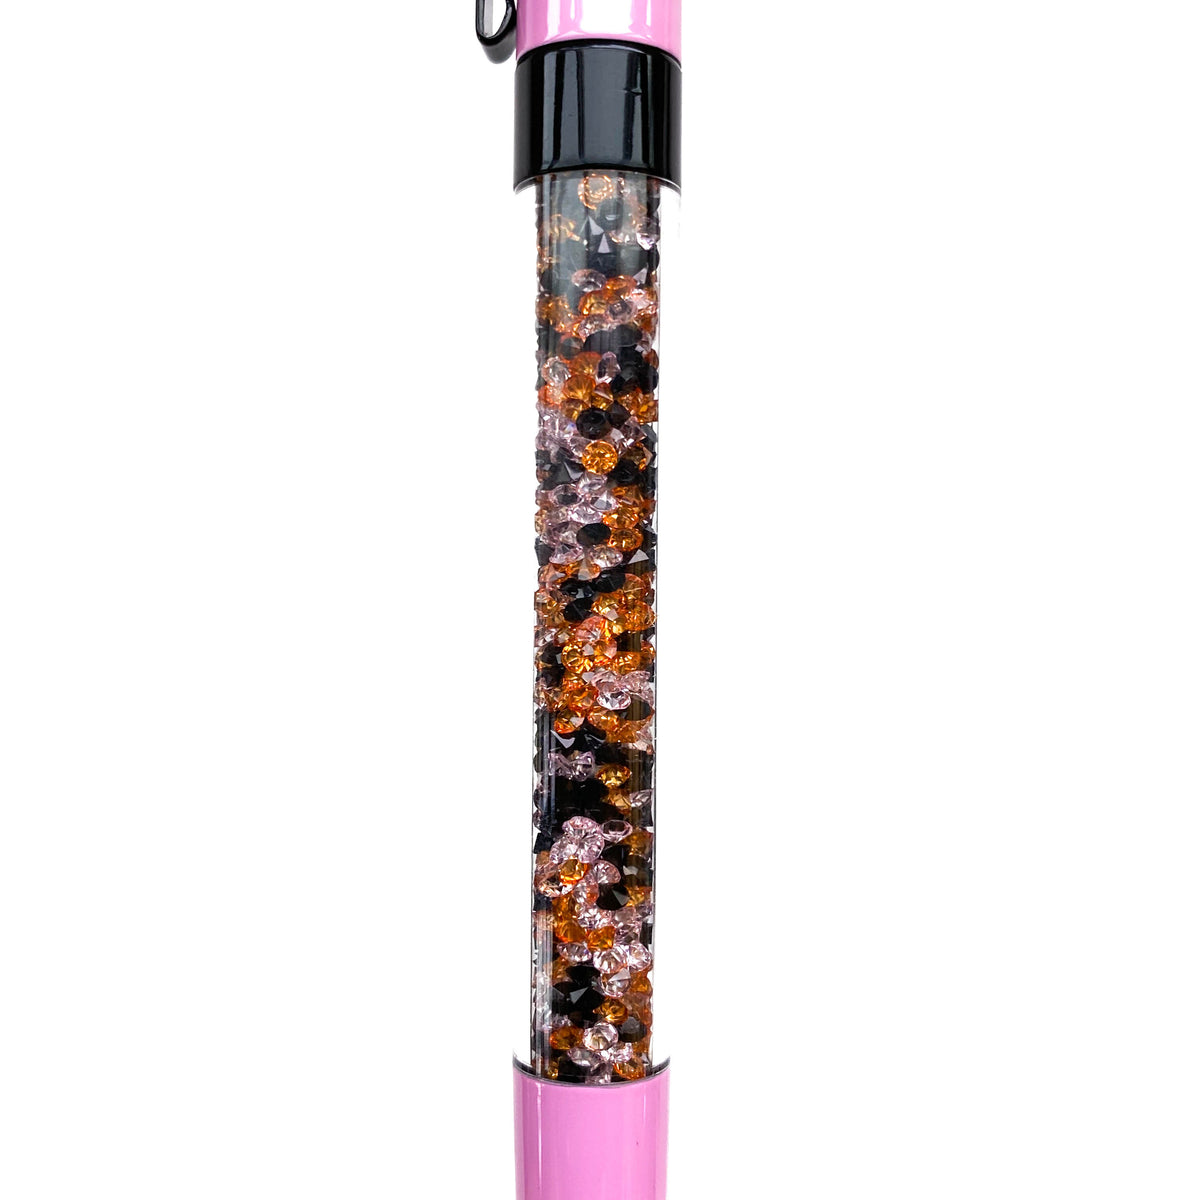 Pink-A-Ween Crystal VBPen | limited kit pen